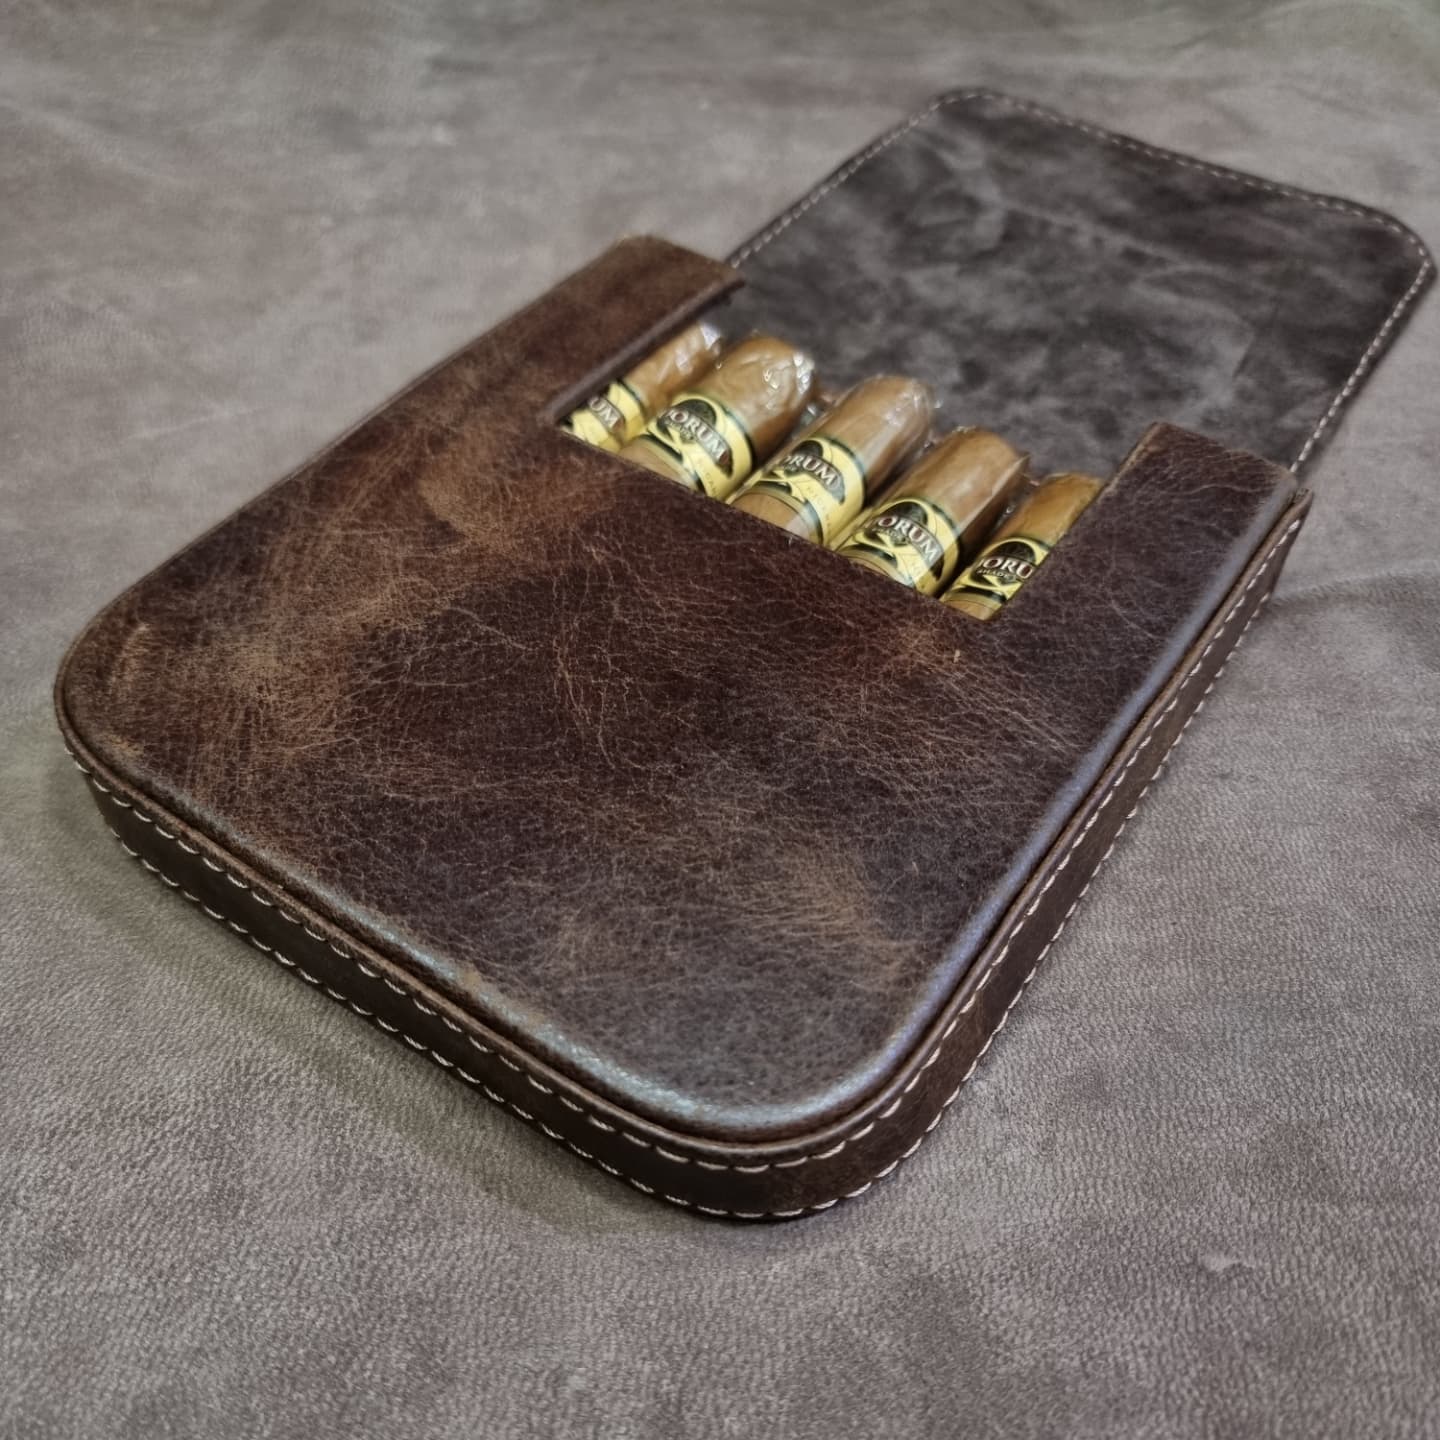 Handmade leather cigar case